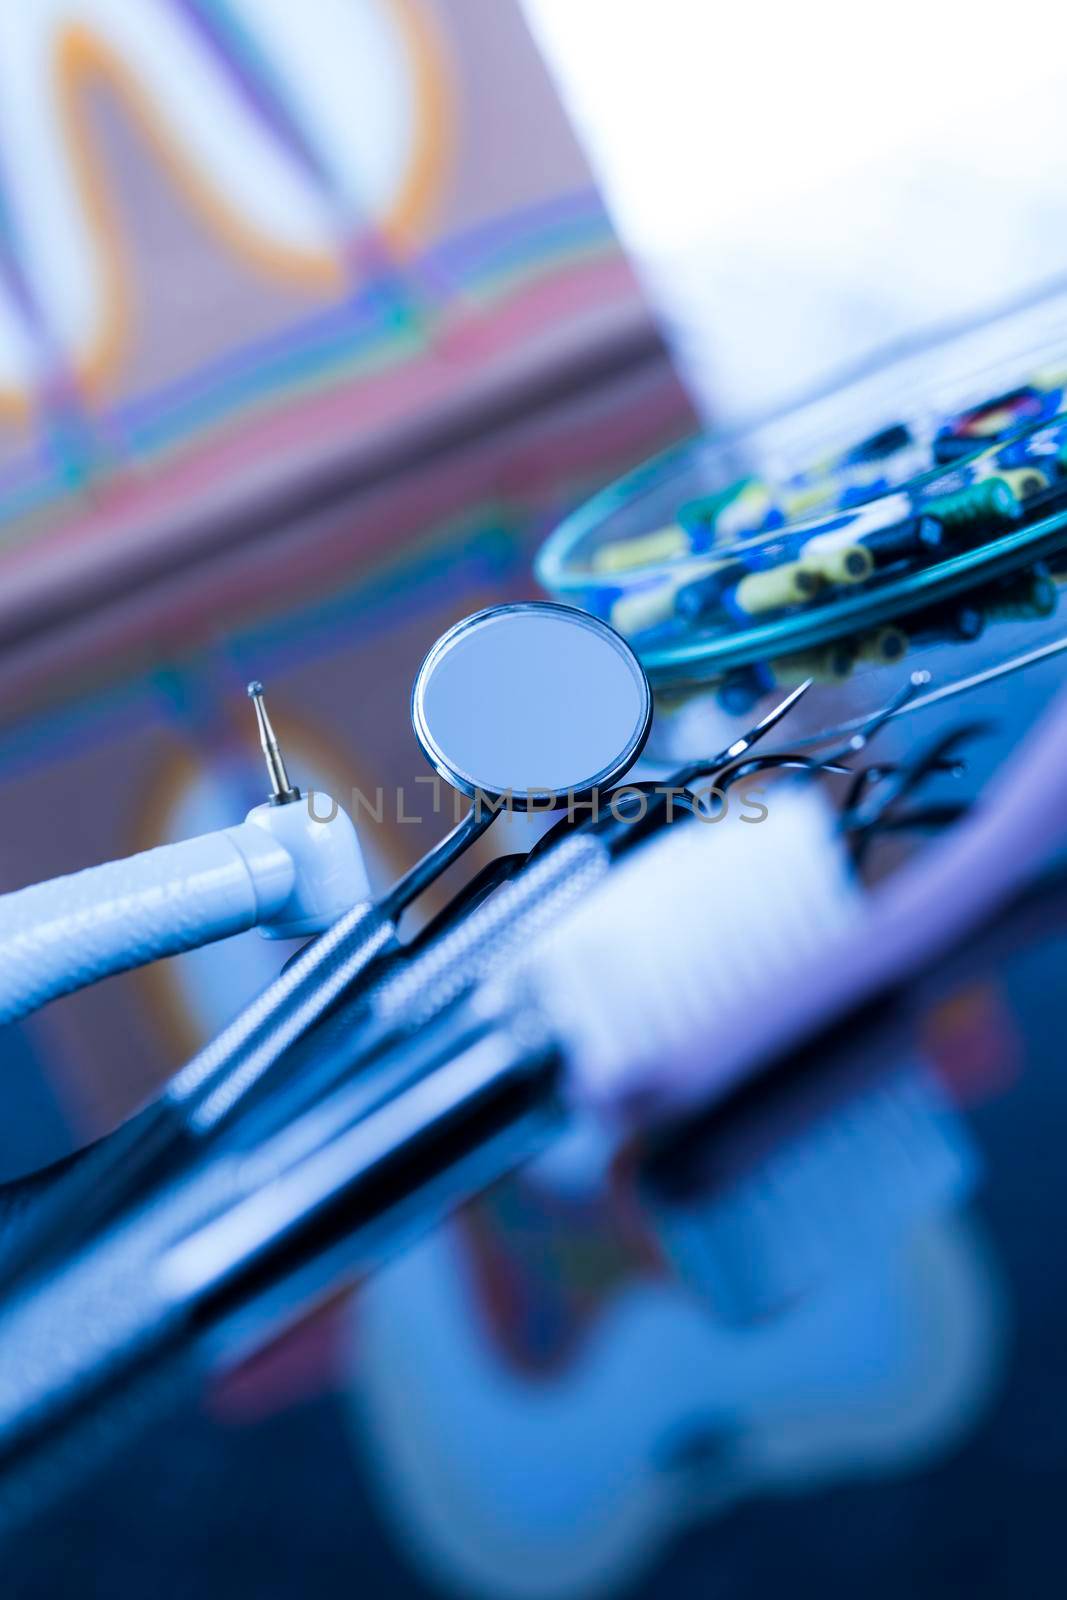 Health, Stomatology equipment, dentistry concept